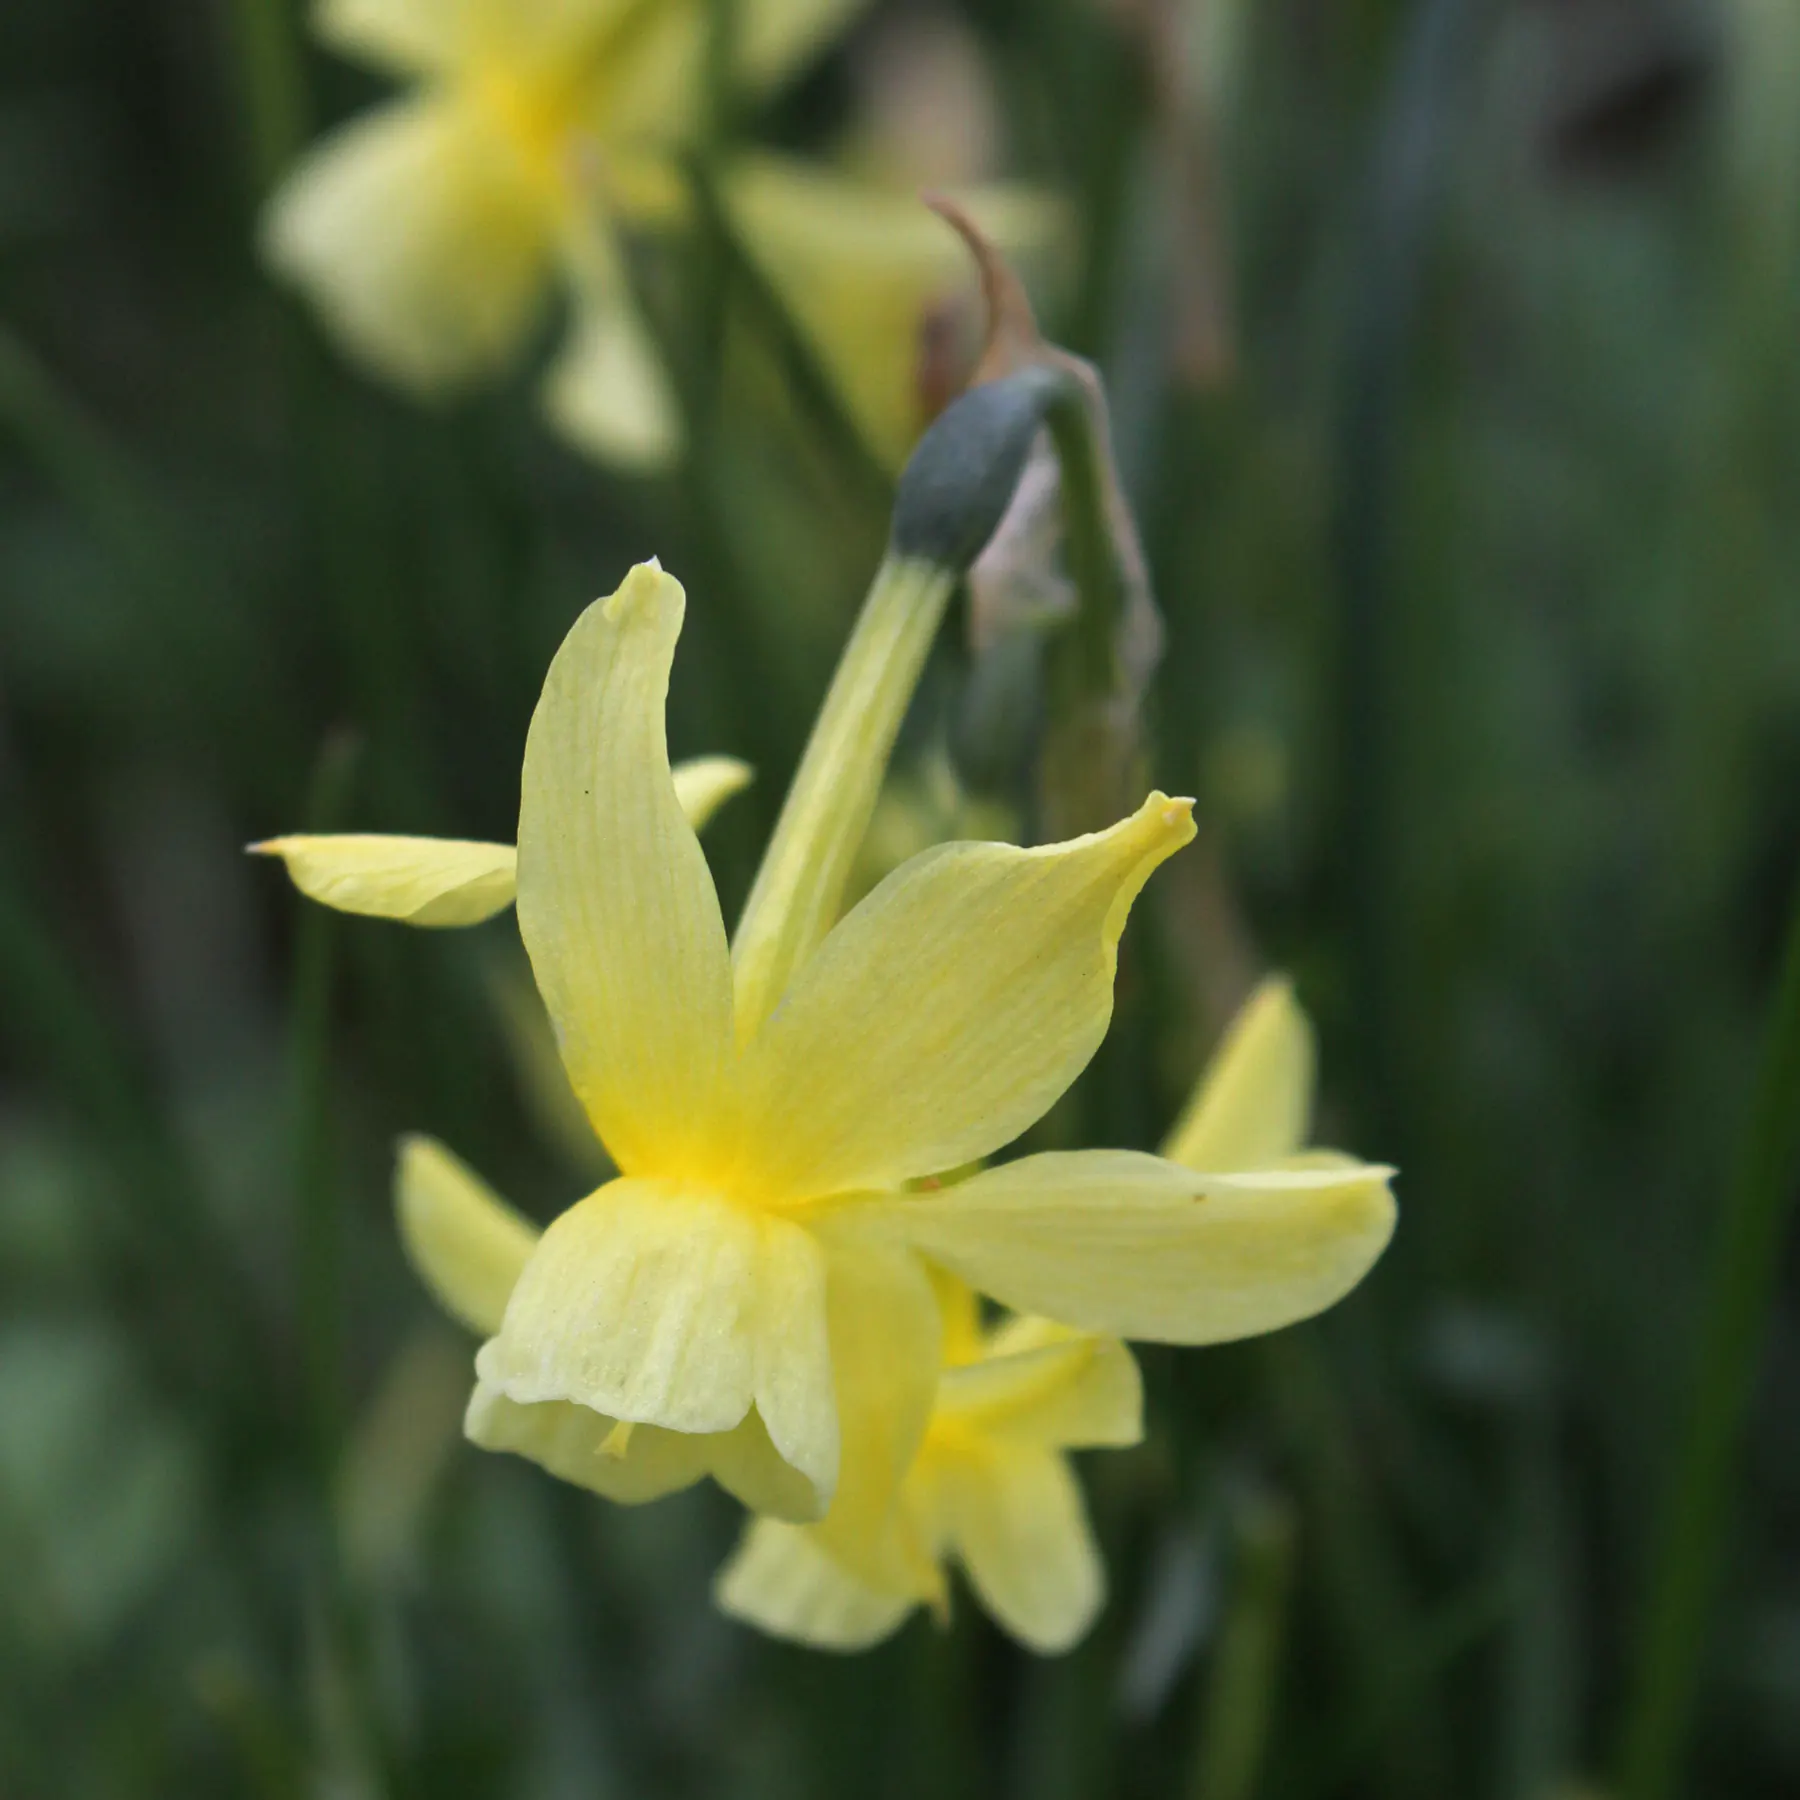 Narcissus triandrus Hawera